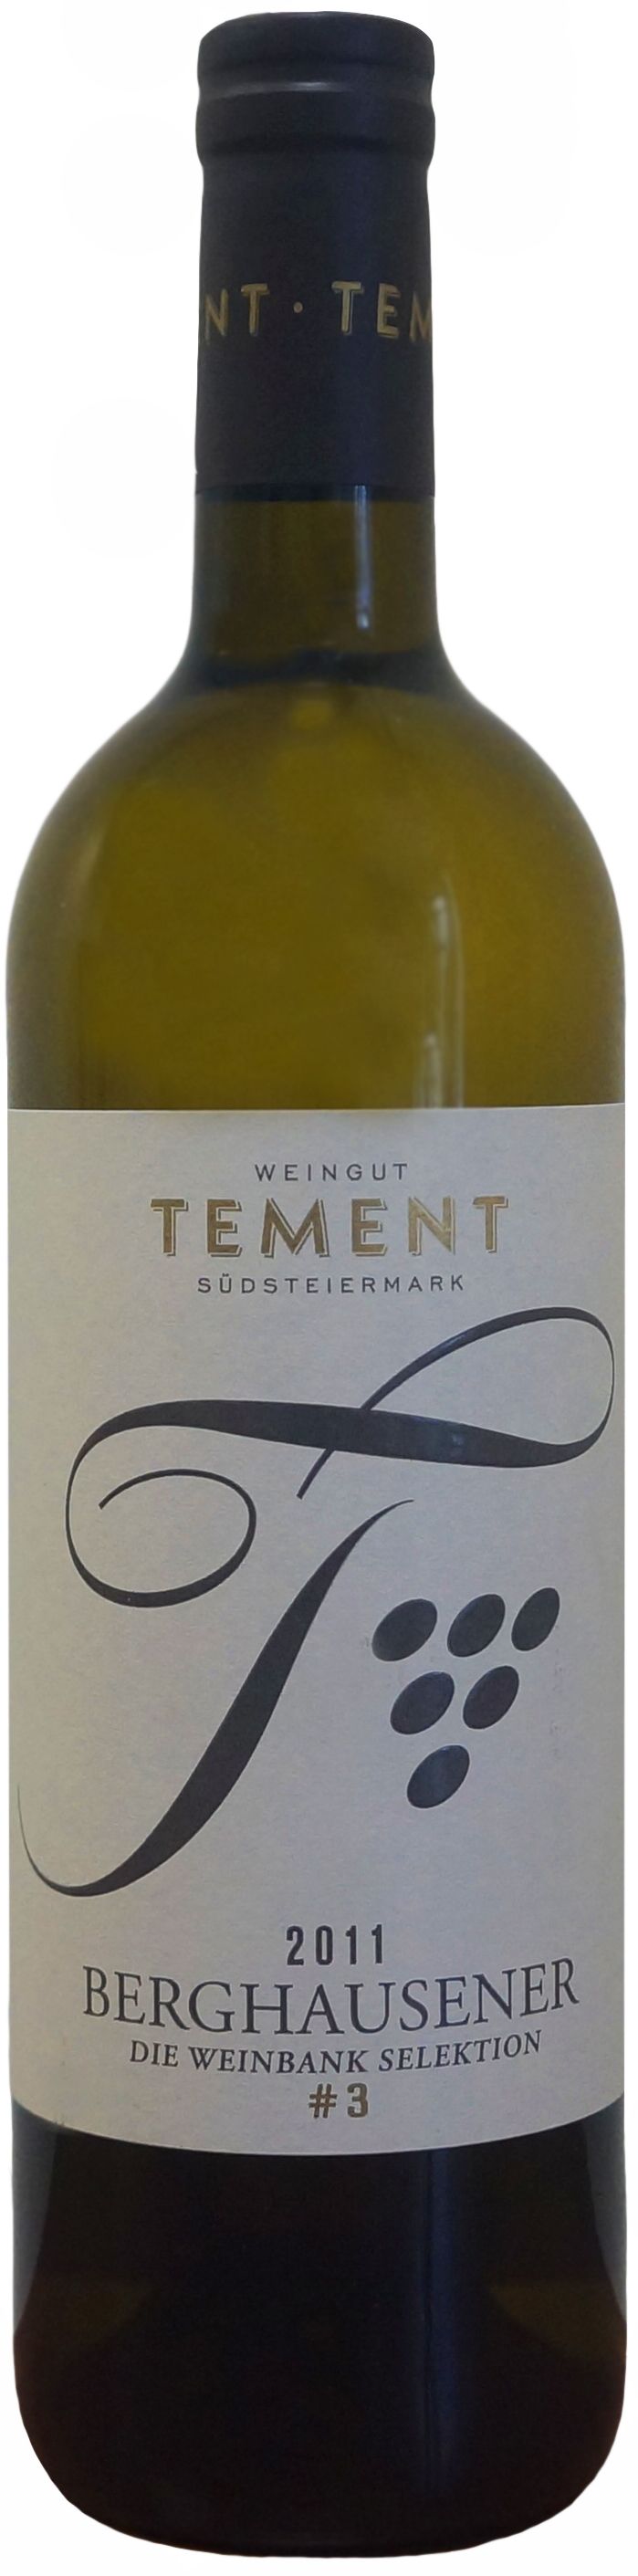 Tement, Berghausener Die Weinbank Selektion №3 Sauvignon Blanc Spatfullung, 2011